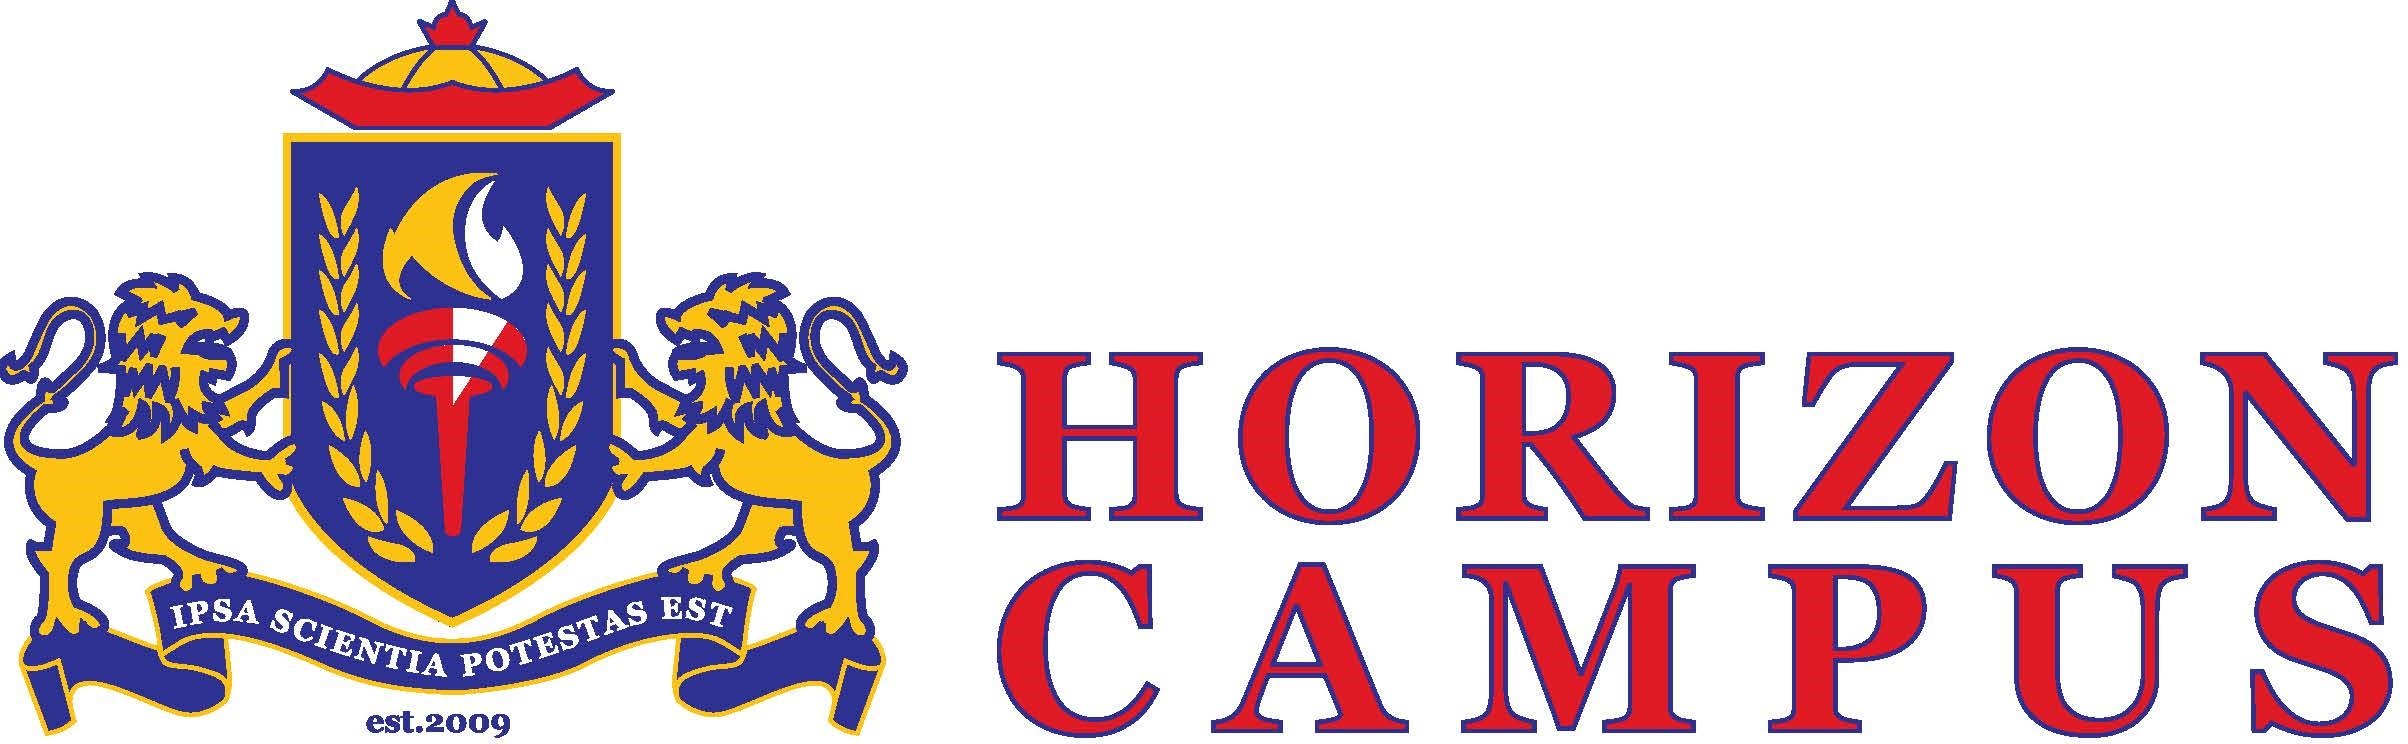 Horizon Campus logo.